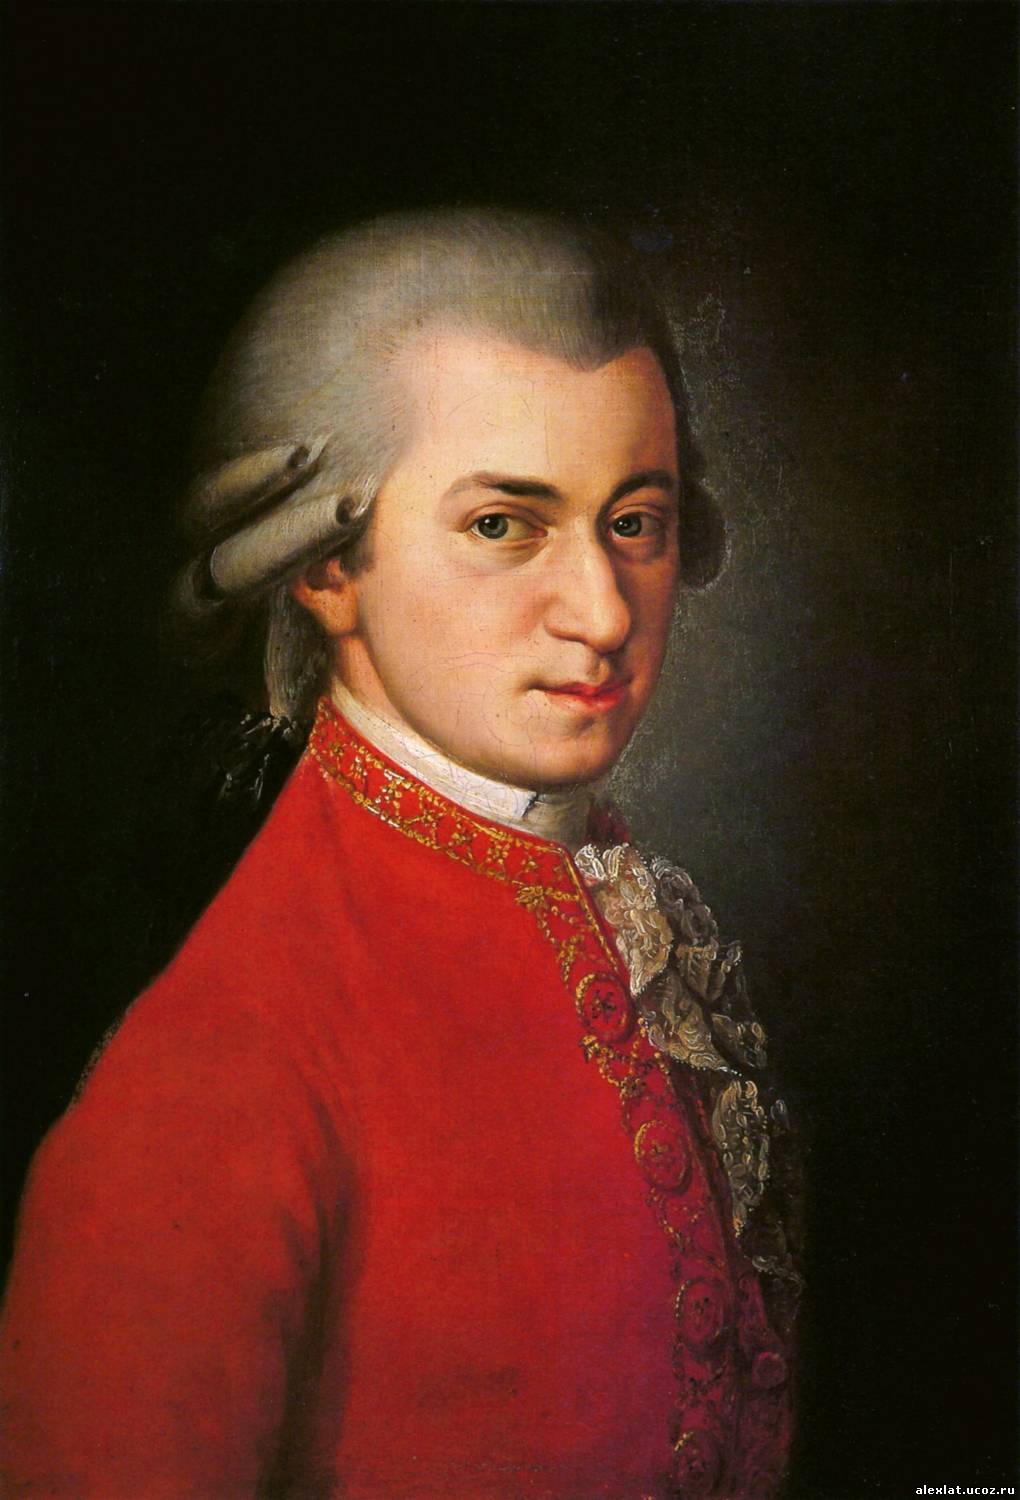 Mozart: Symphony #40 in G Minor, K.550